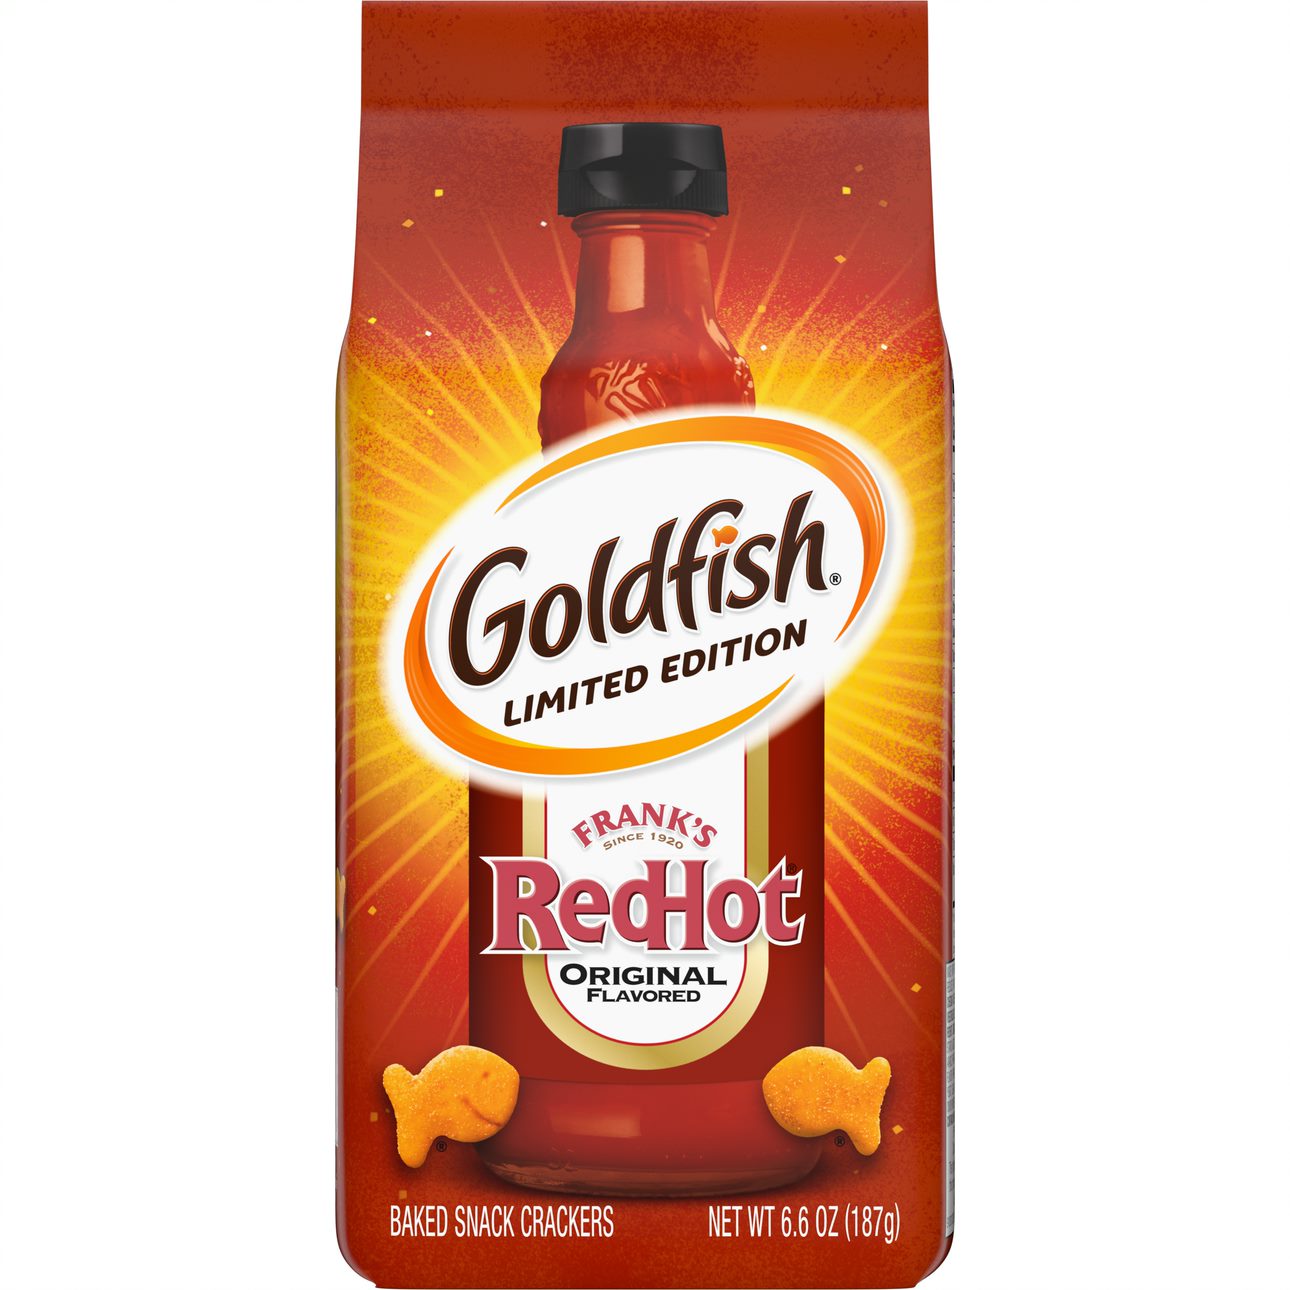 Frank's RedHot Goldfish